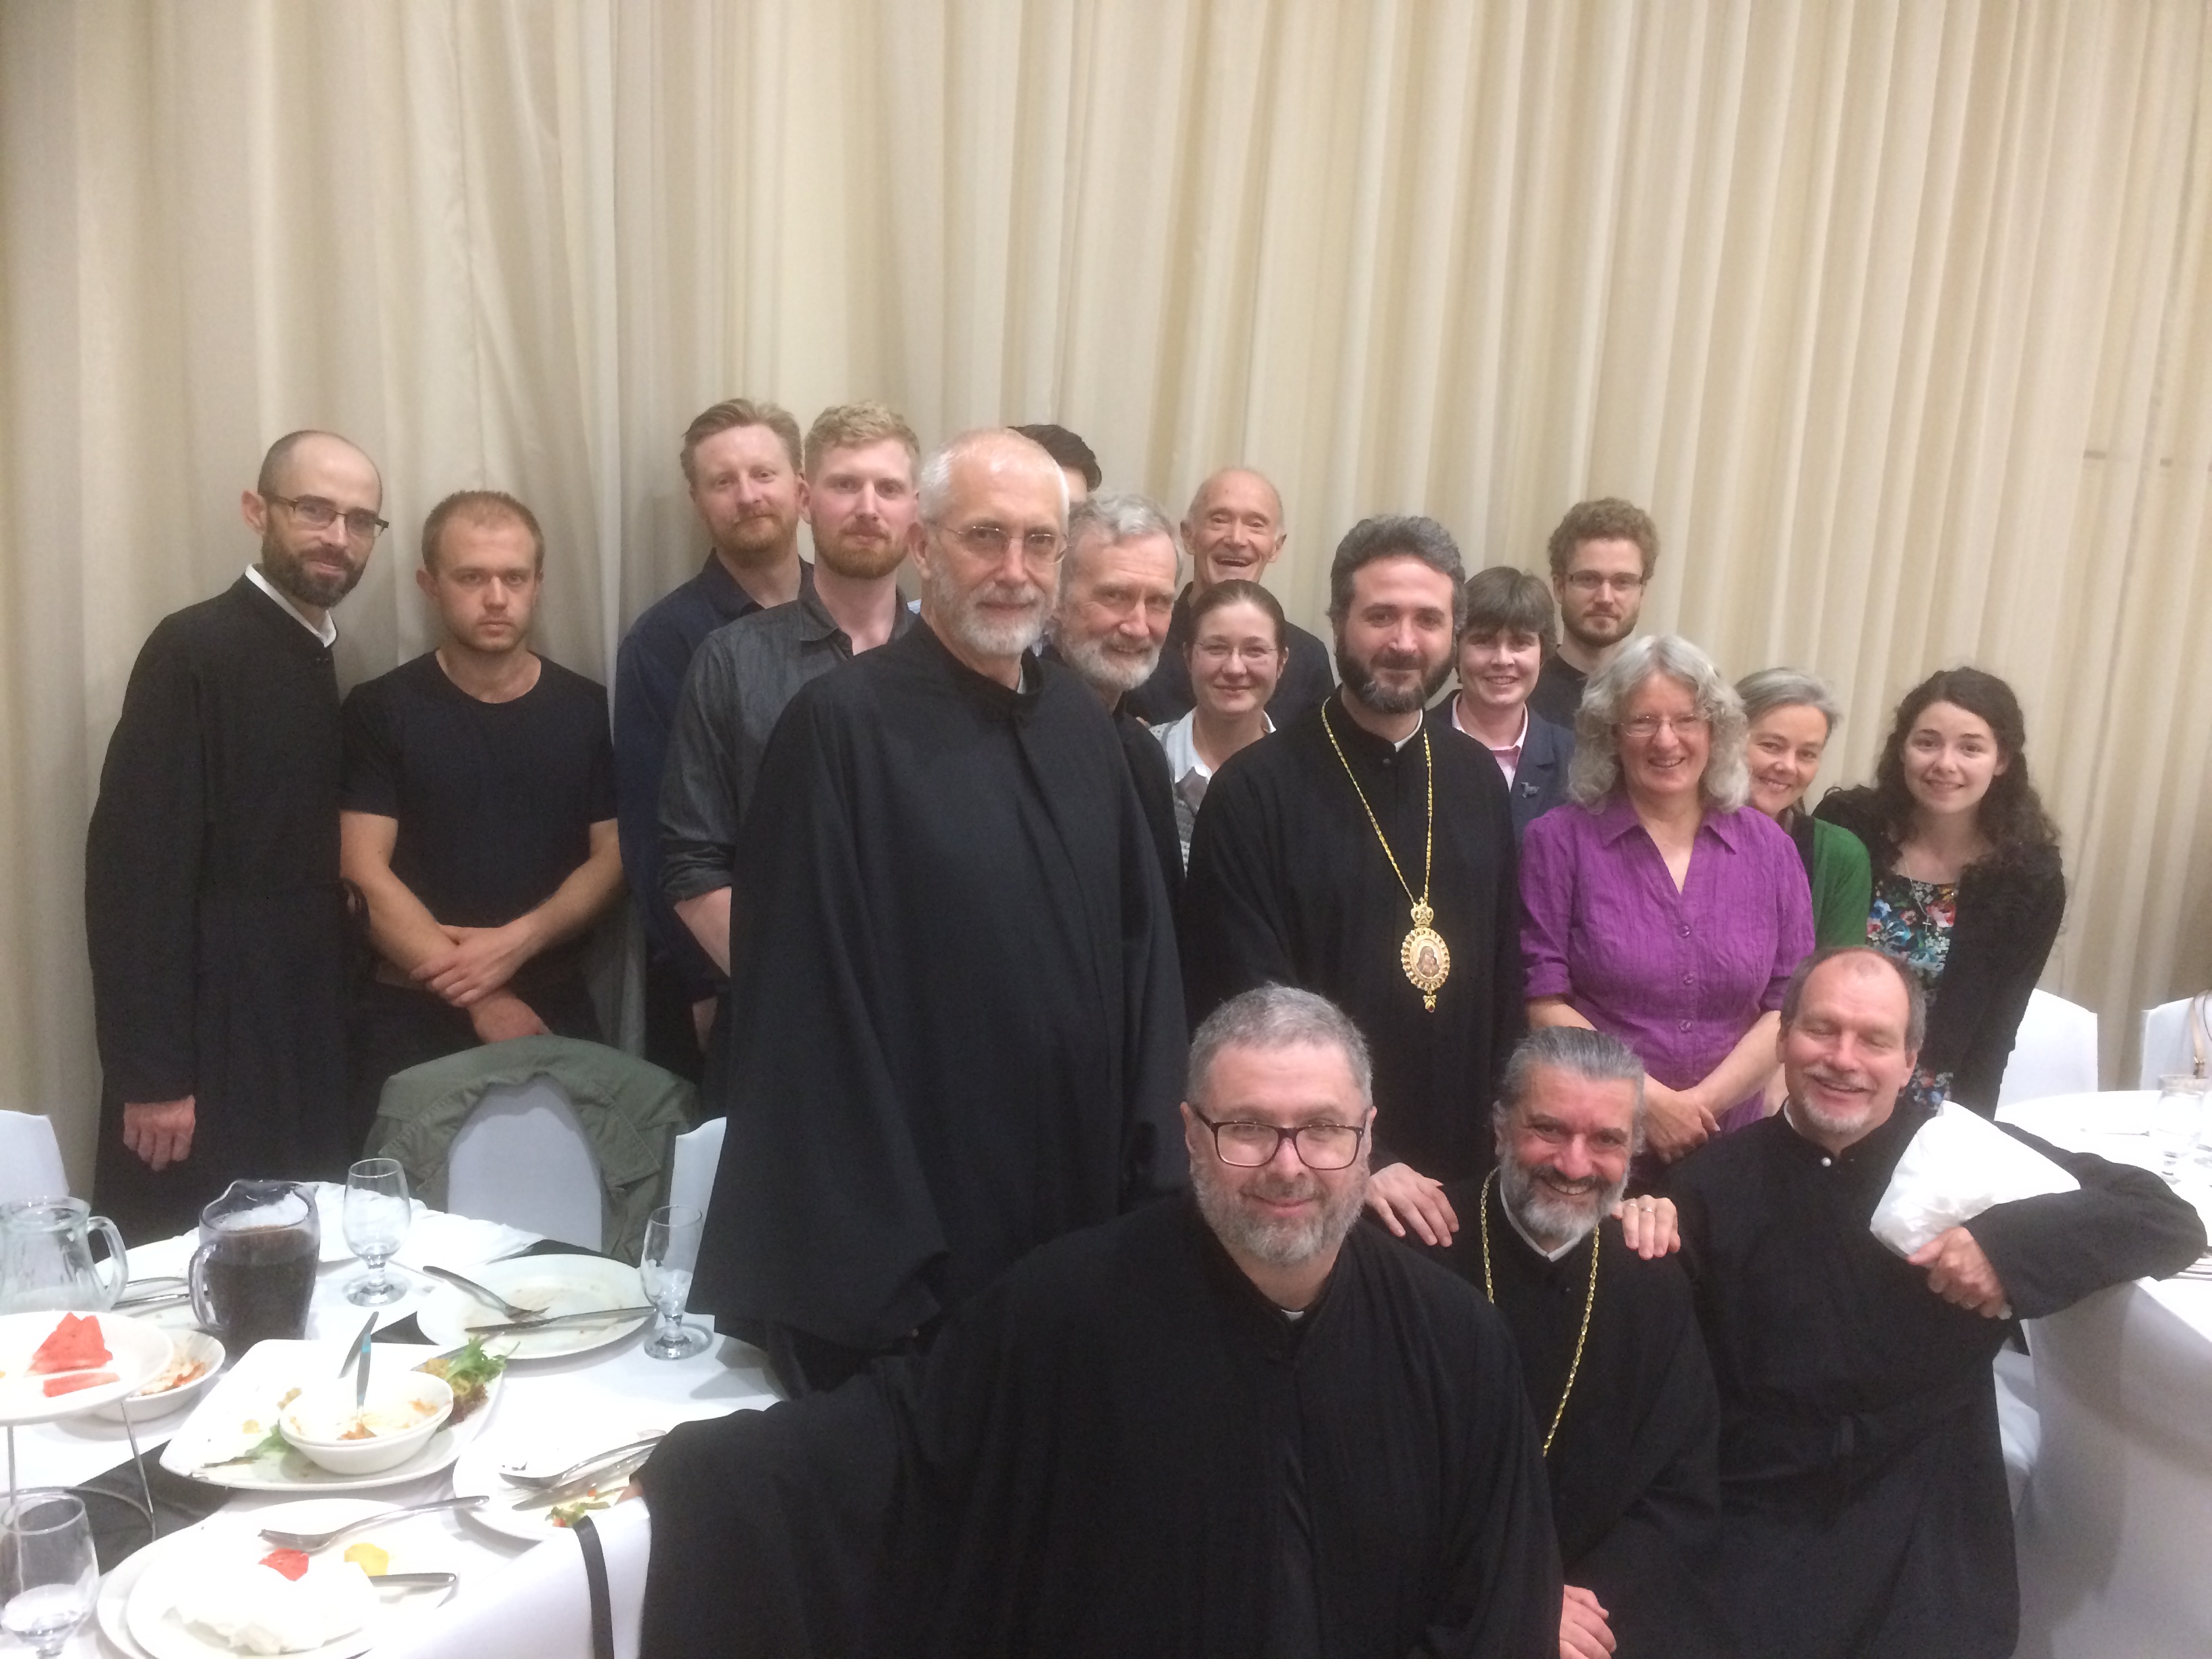 Members of The Good Shepherd Orthodox Church with Metropolitan Basilios and Antiochian Clergy.